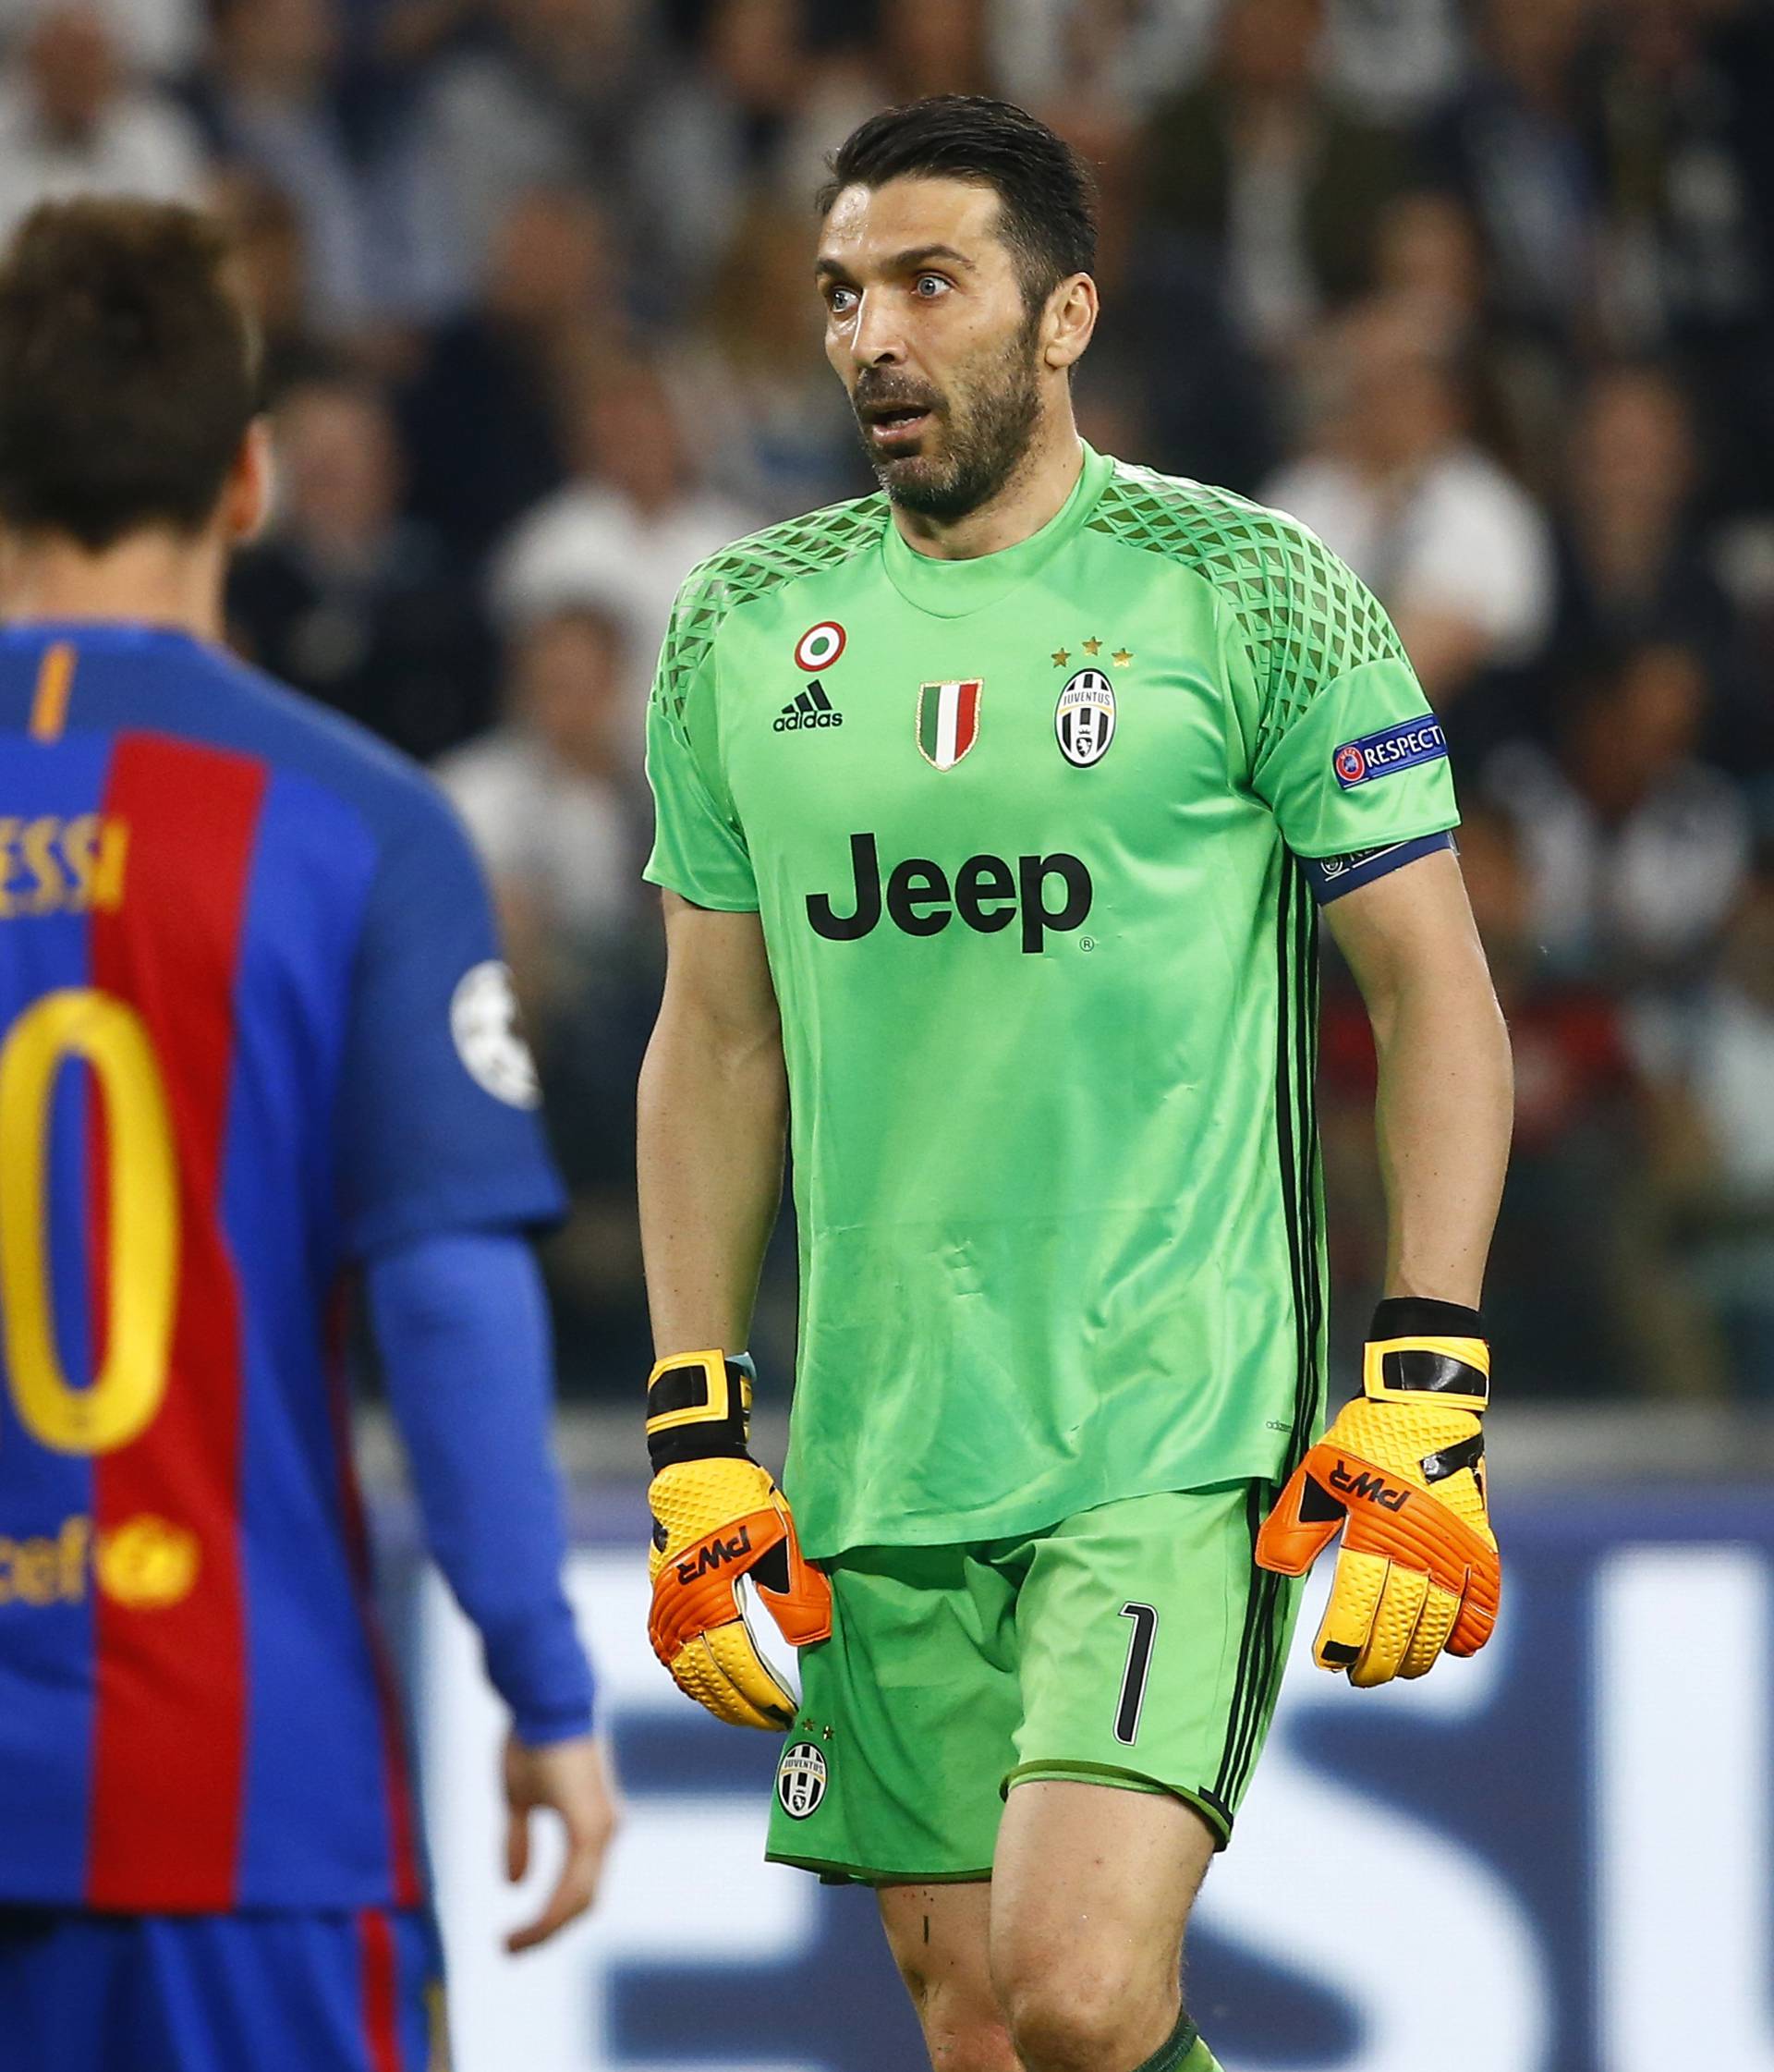 Juventus' Gianluigi Buffon looks on after Barcelona's Lionel Messi has a goal disallowed